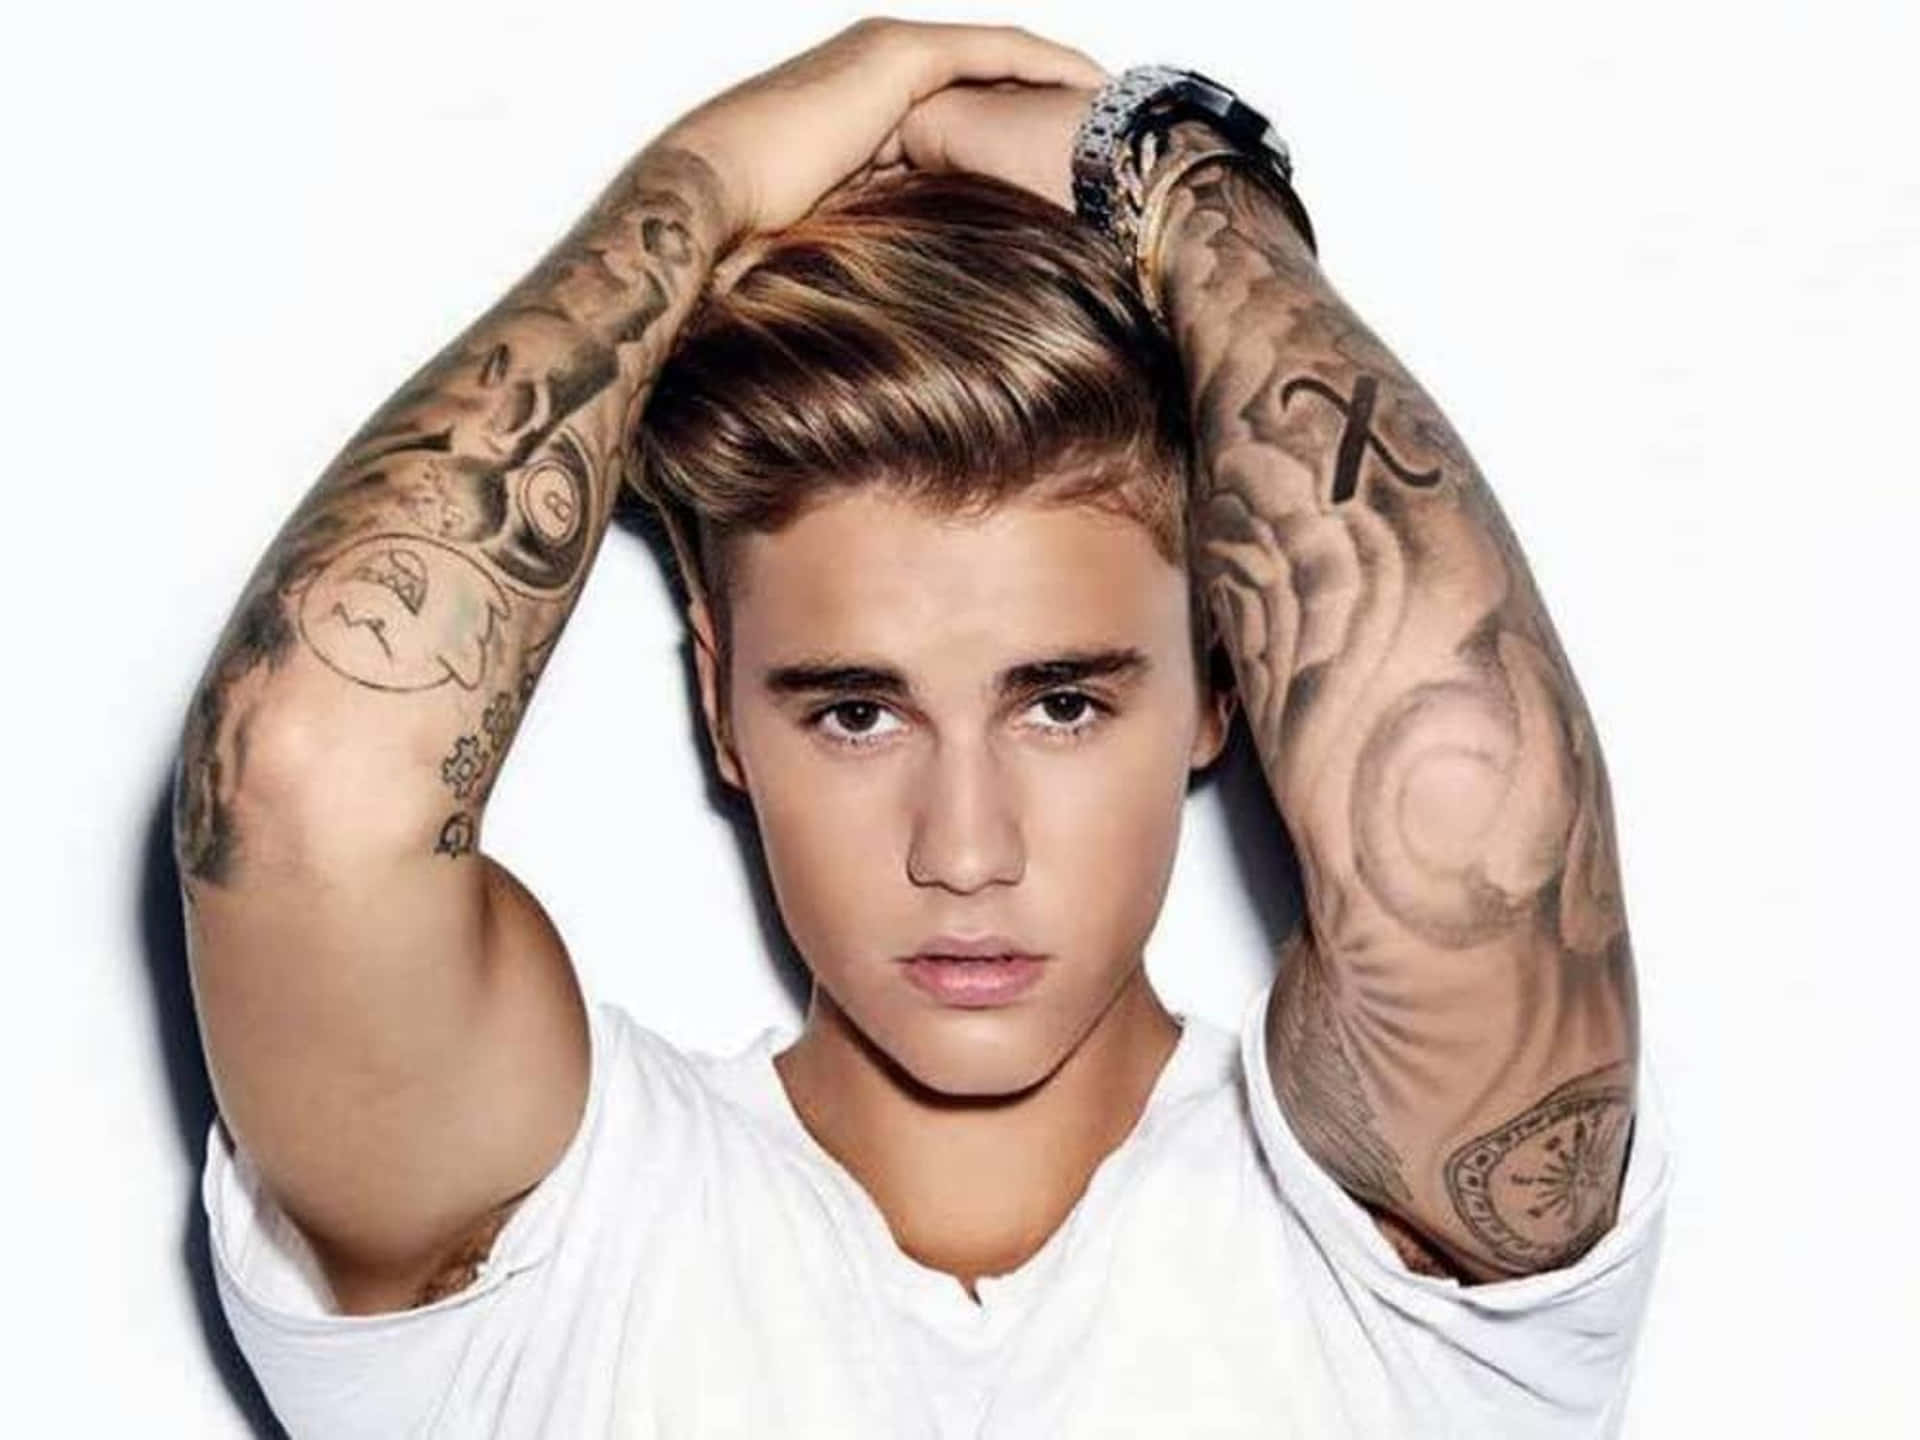 Justin Bieber 2015 Wallpapers